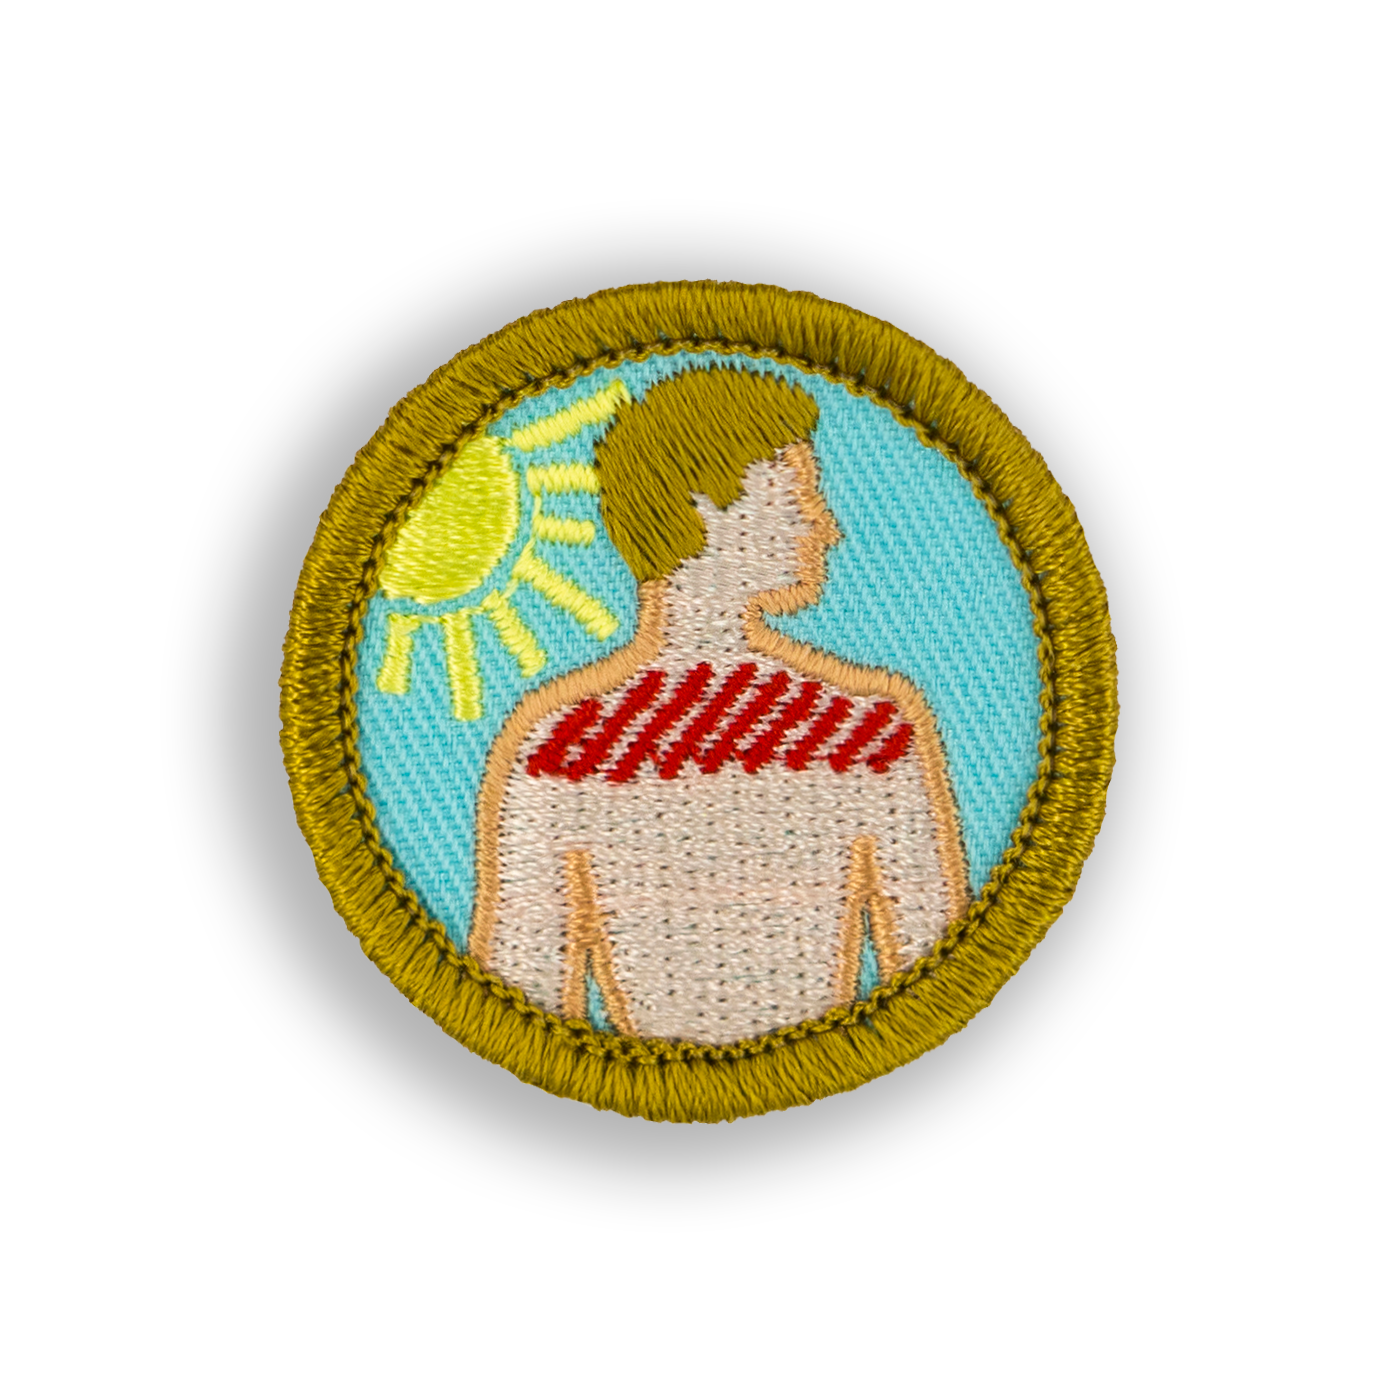 Sunburn Patch | Demerit Wear - Fake Merit Badges